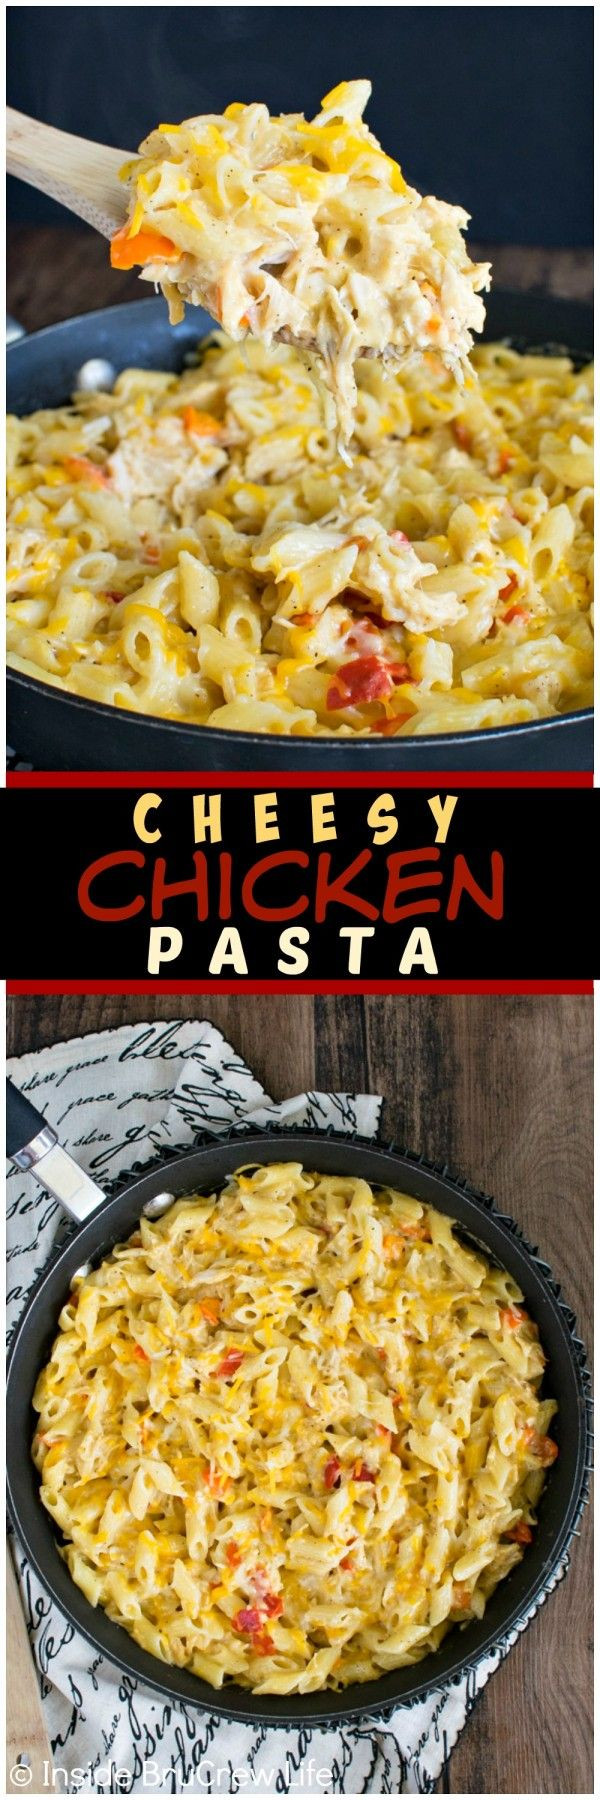 Easy Chicken Spaghetti Casserole
 Best 25 Cheesy chicken pasta ideas on Pinterest